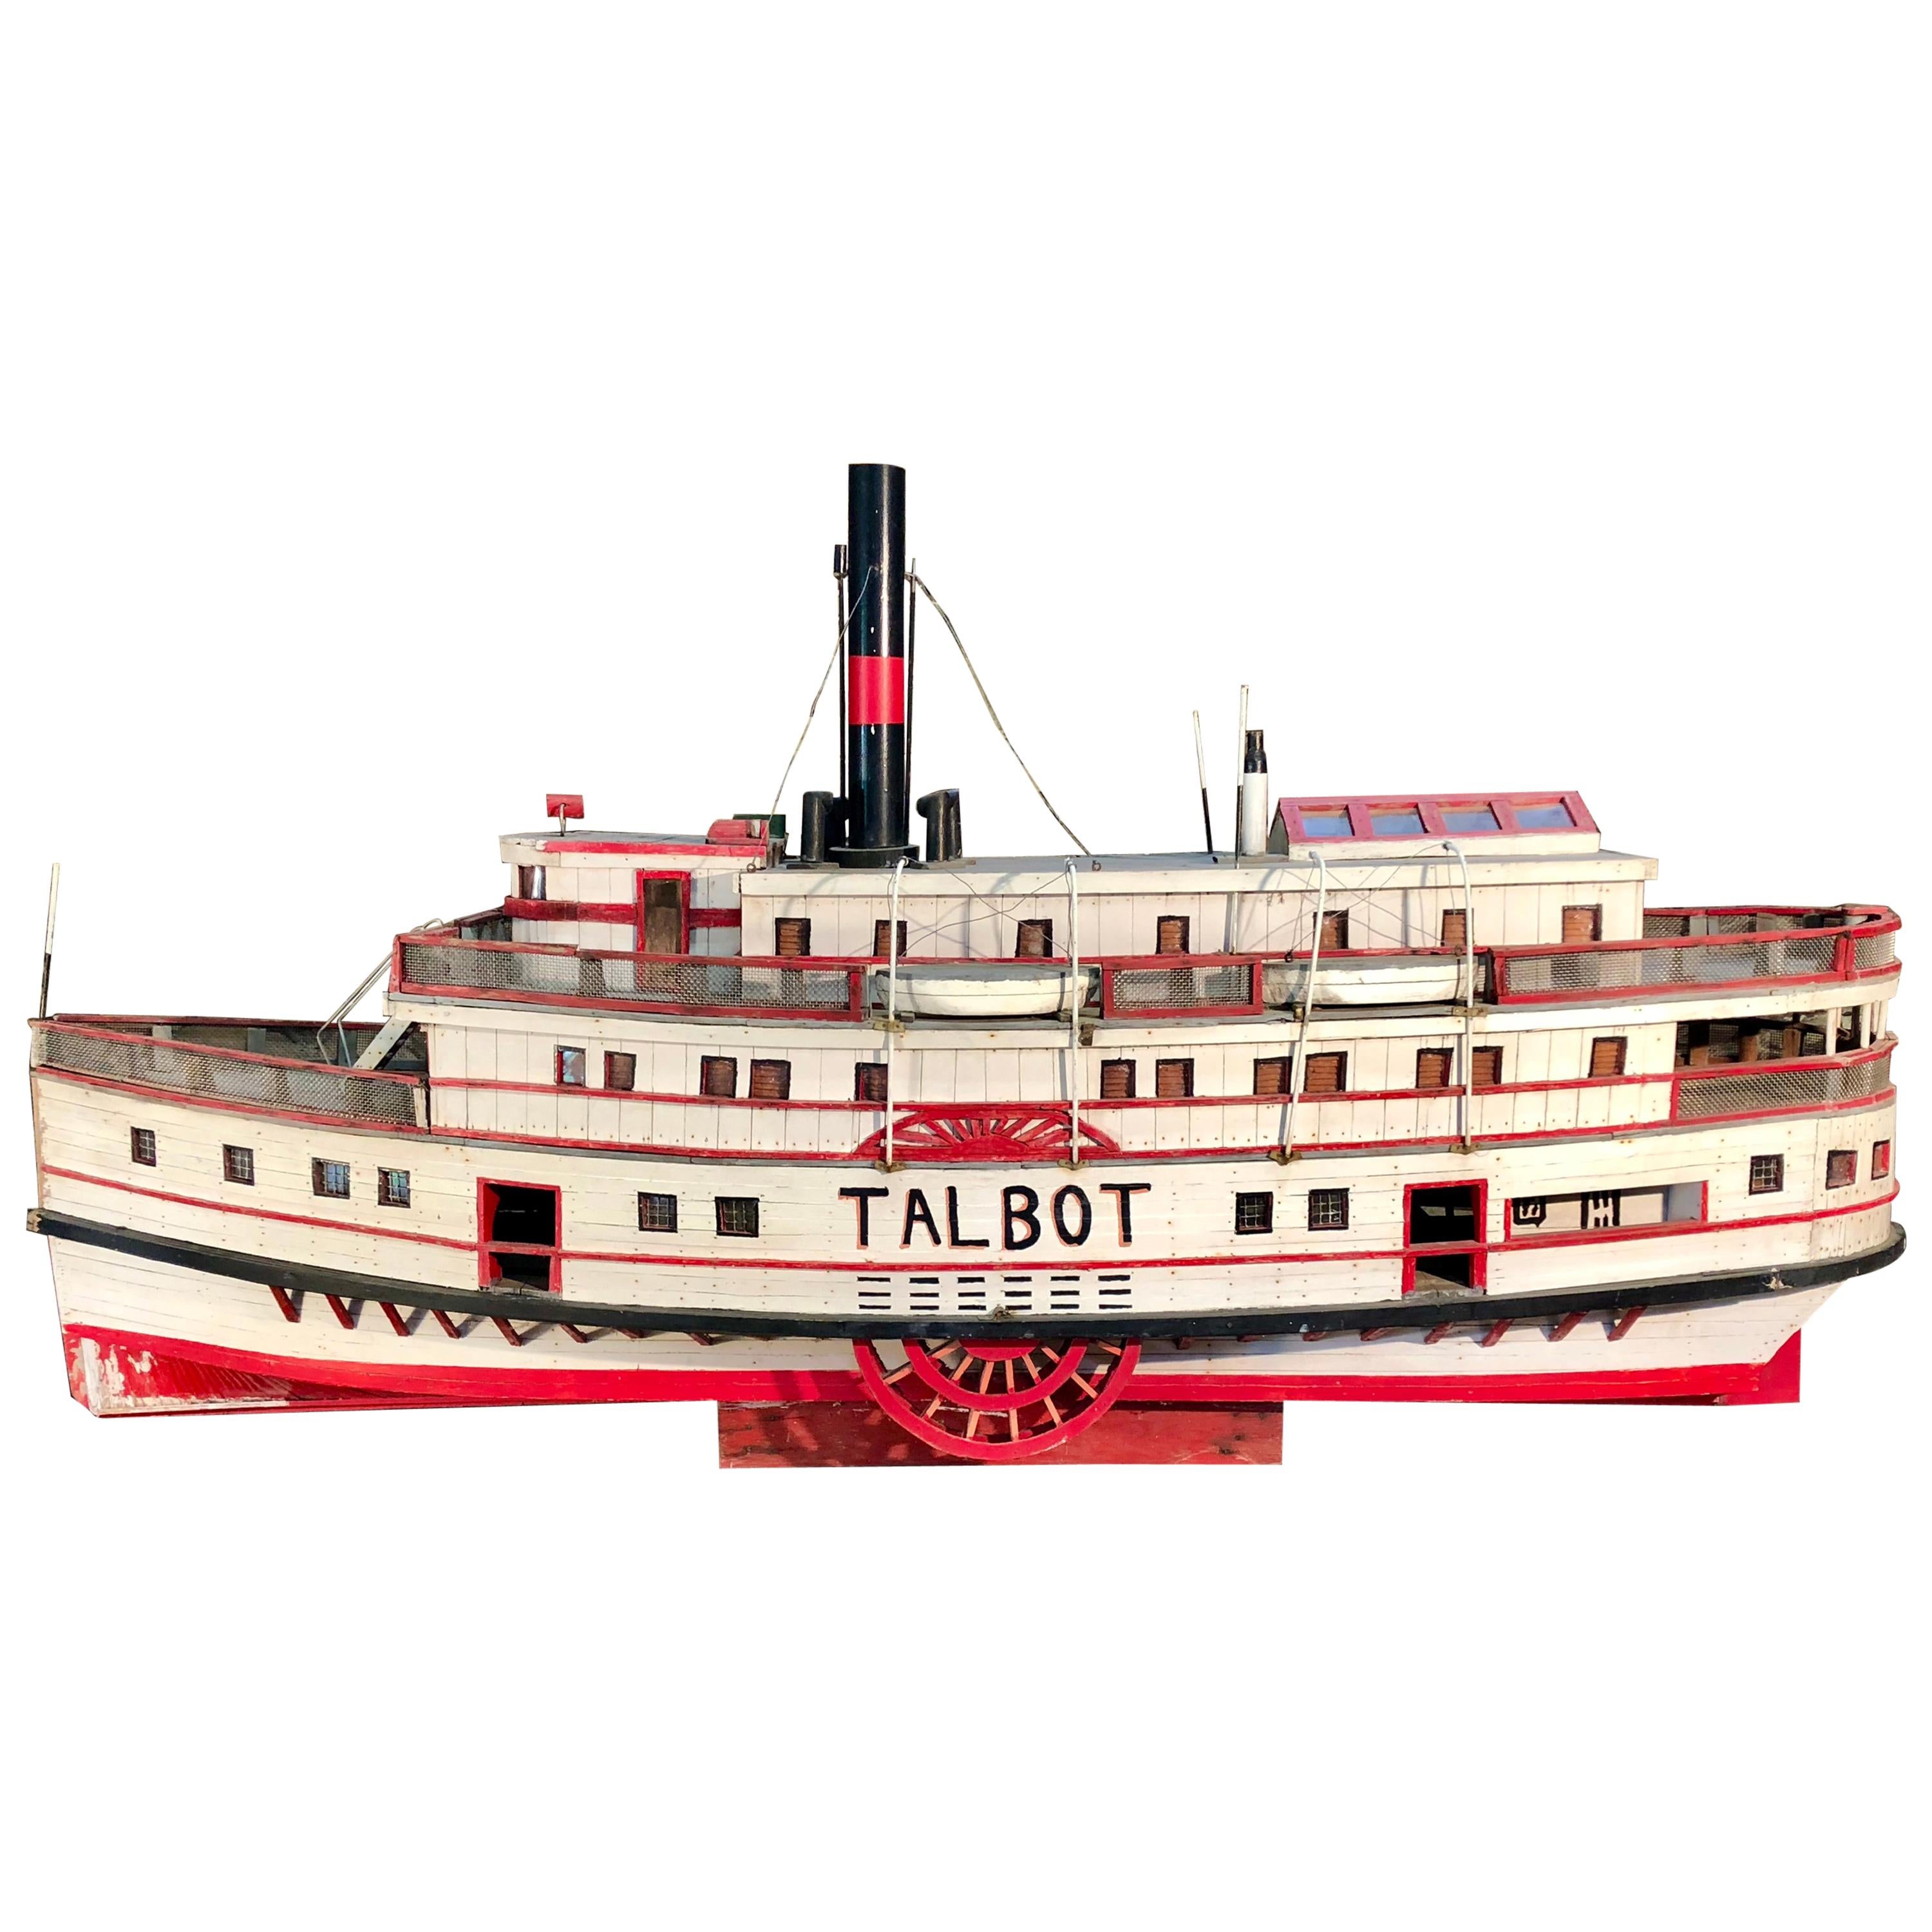 6.5 Feet Long Folk-Art Model of a Riverboat, “Talbot”